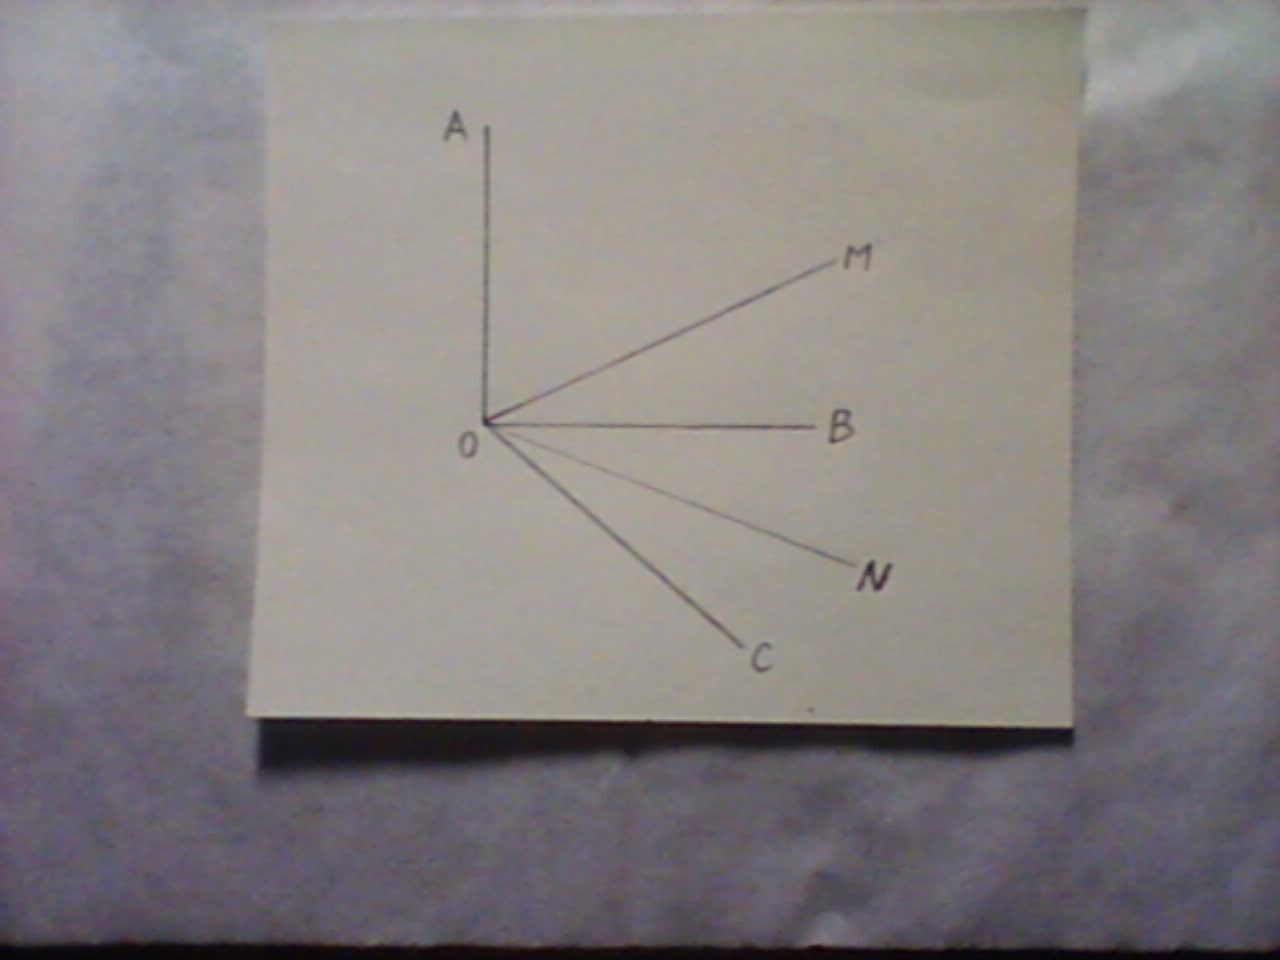 (1)如图，已知∠AOB=90度，∠BOC=40度，OM平分∠AOC，ON平分∠BOC，求∠MON的度数.